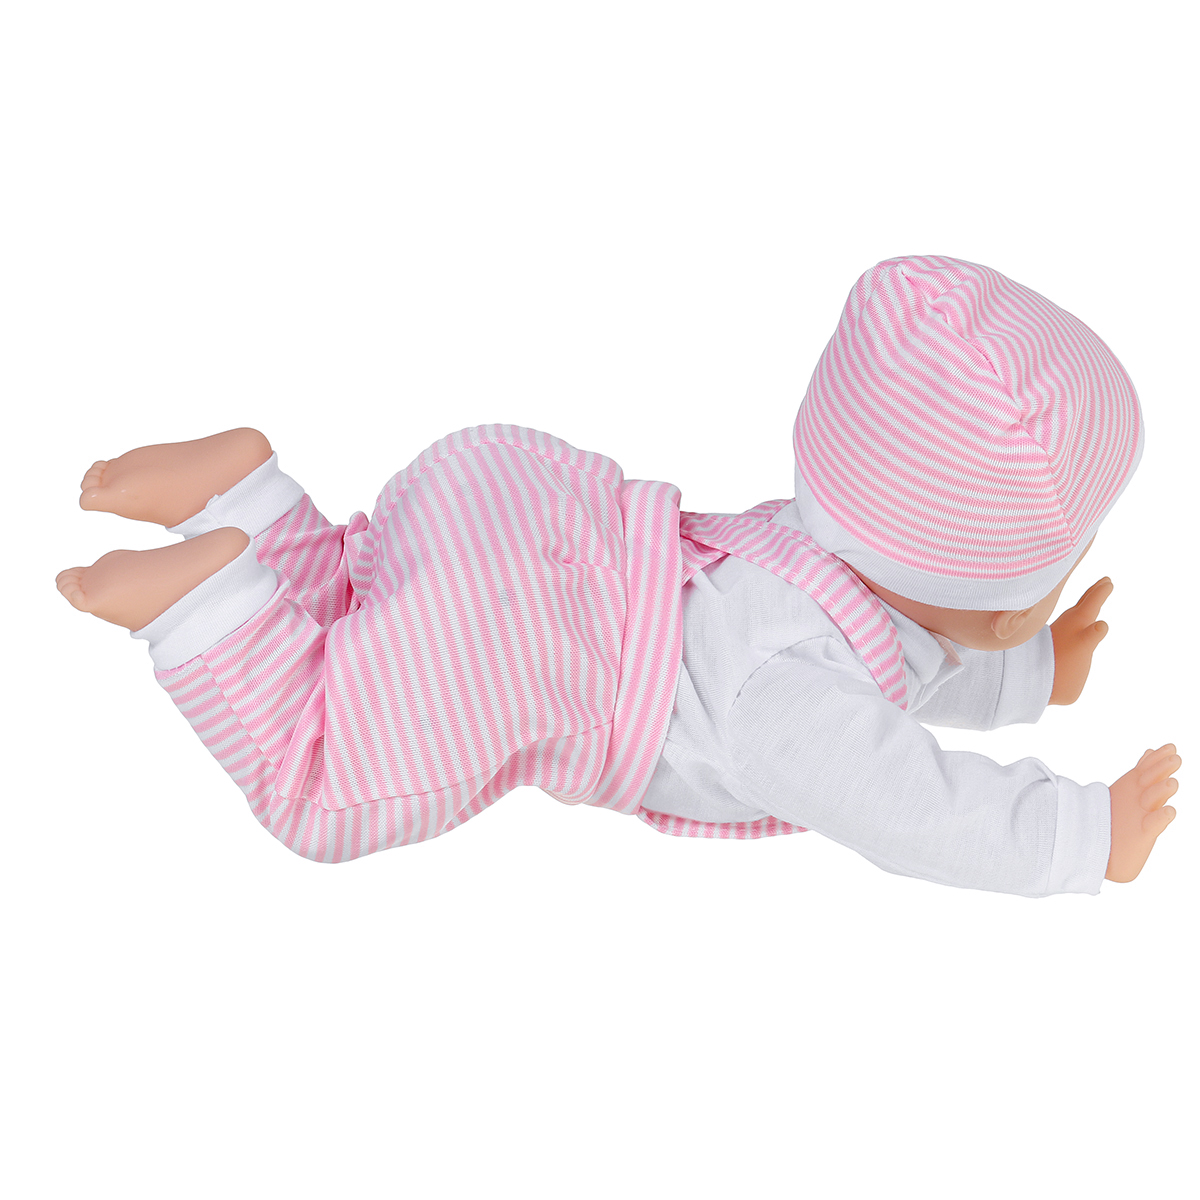 13Inch-Simulation-Vinyl-Doll-Crawling-Doll-Baby-Crawling-Toddler-Simulation-Doll-Childrens-Toys-1818658-8